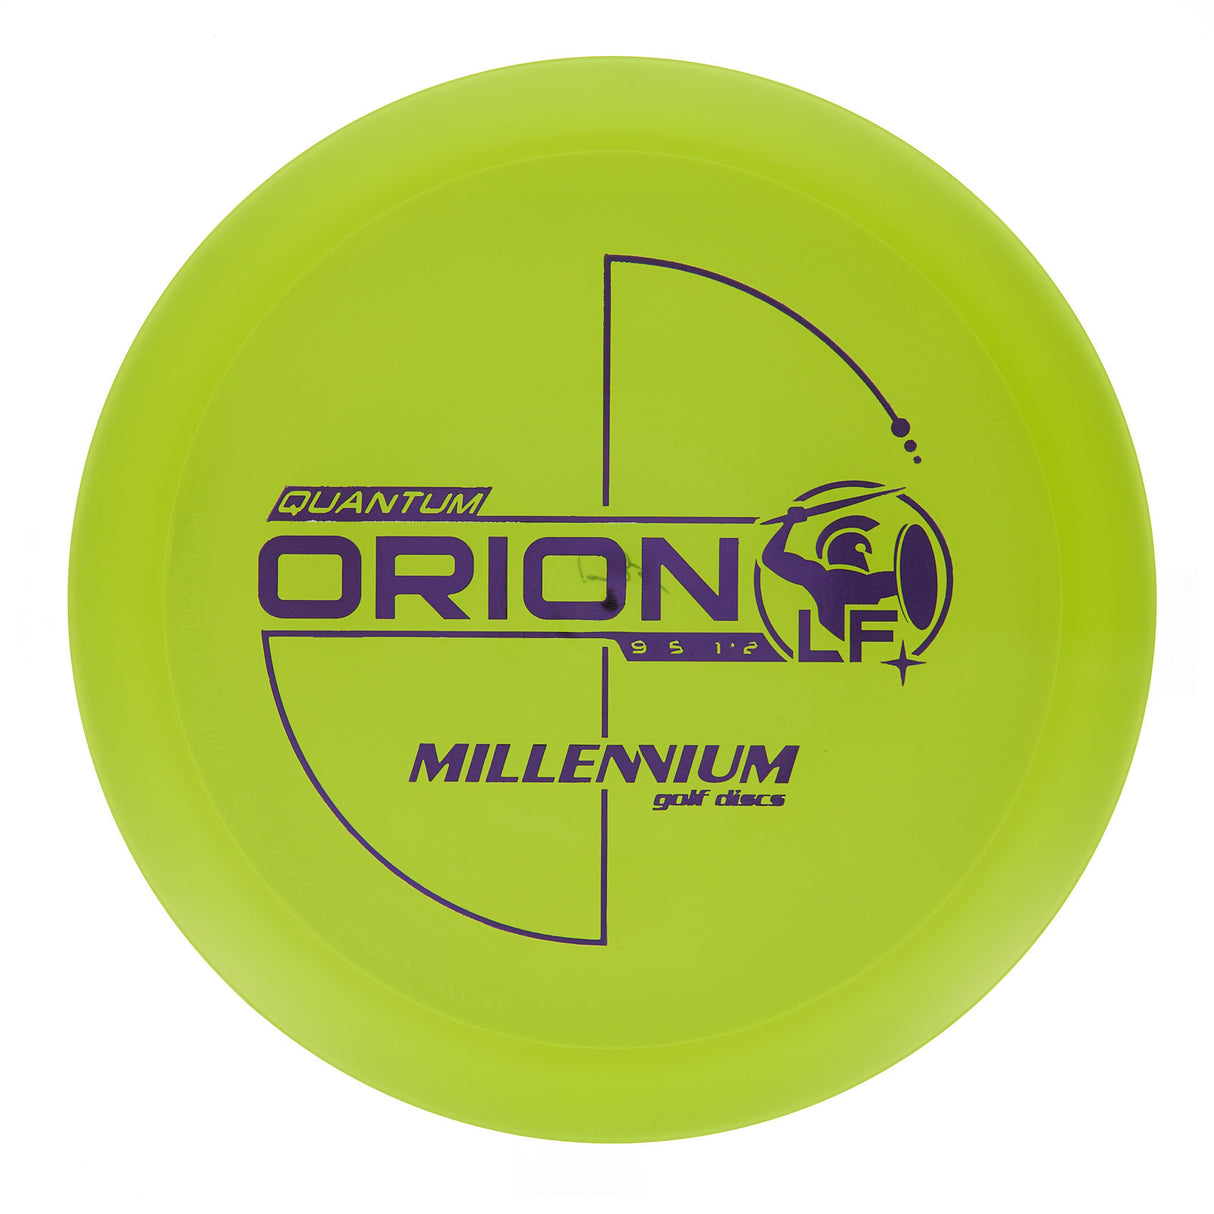 Millennium Orion LF - Quantum 175g | Style 0002